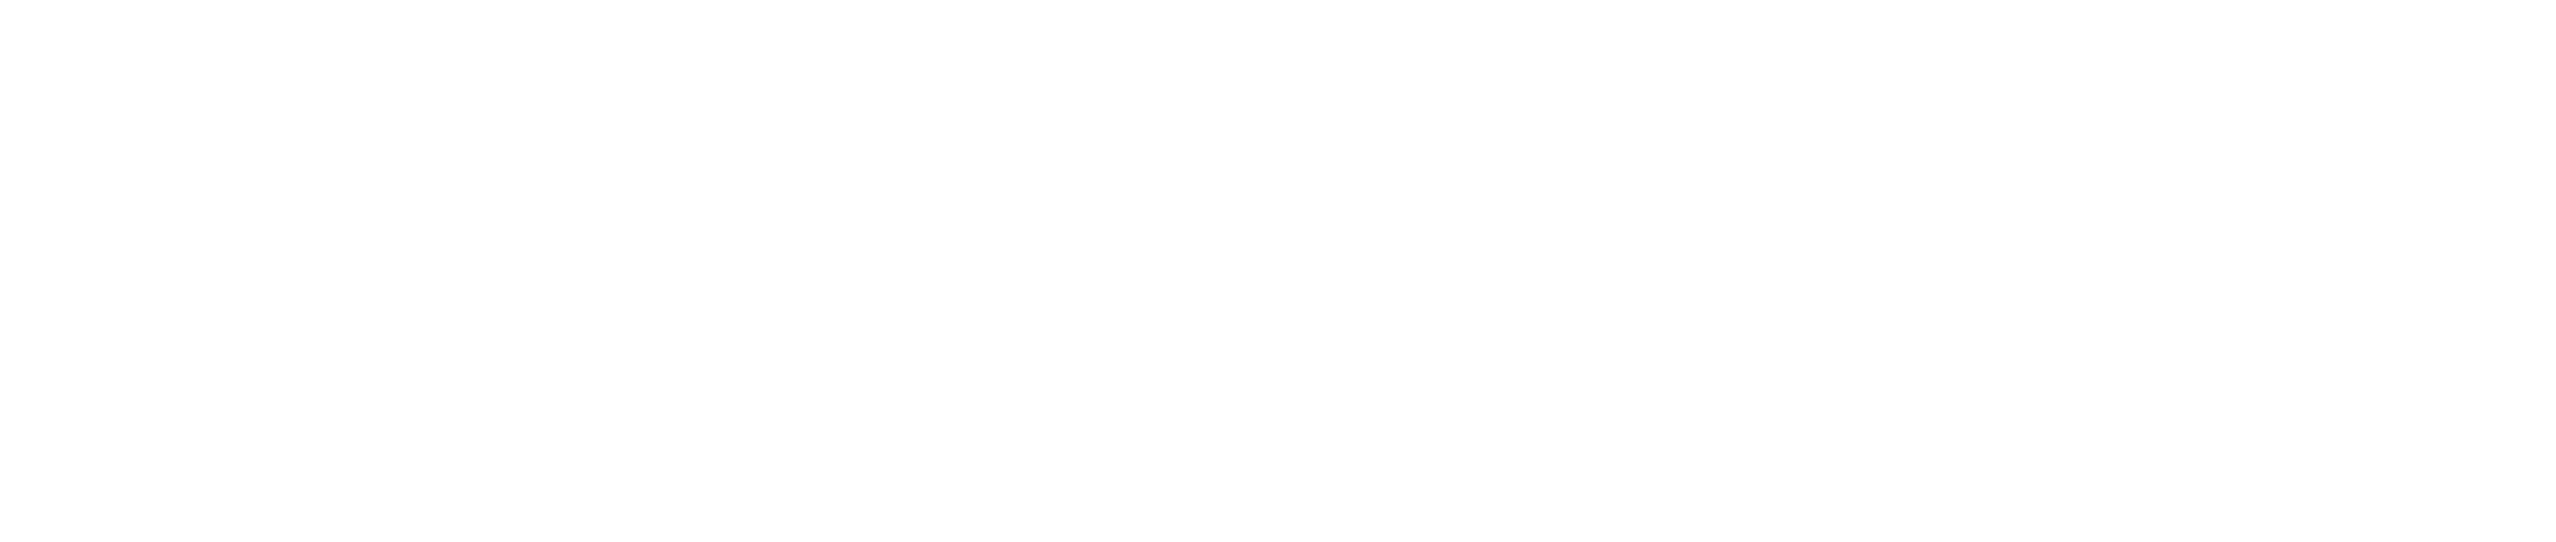 polish properties footer logo